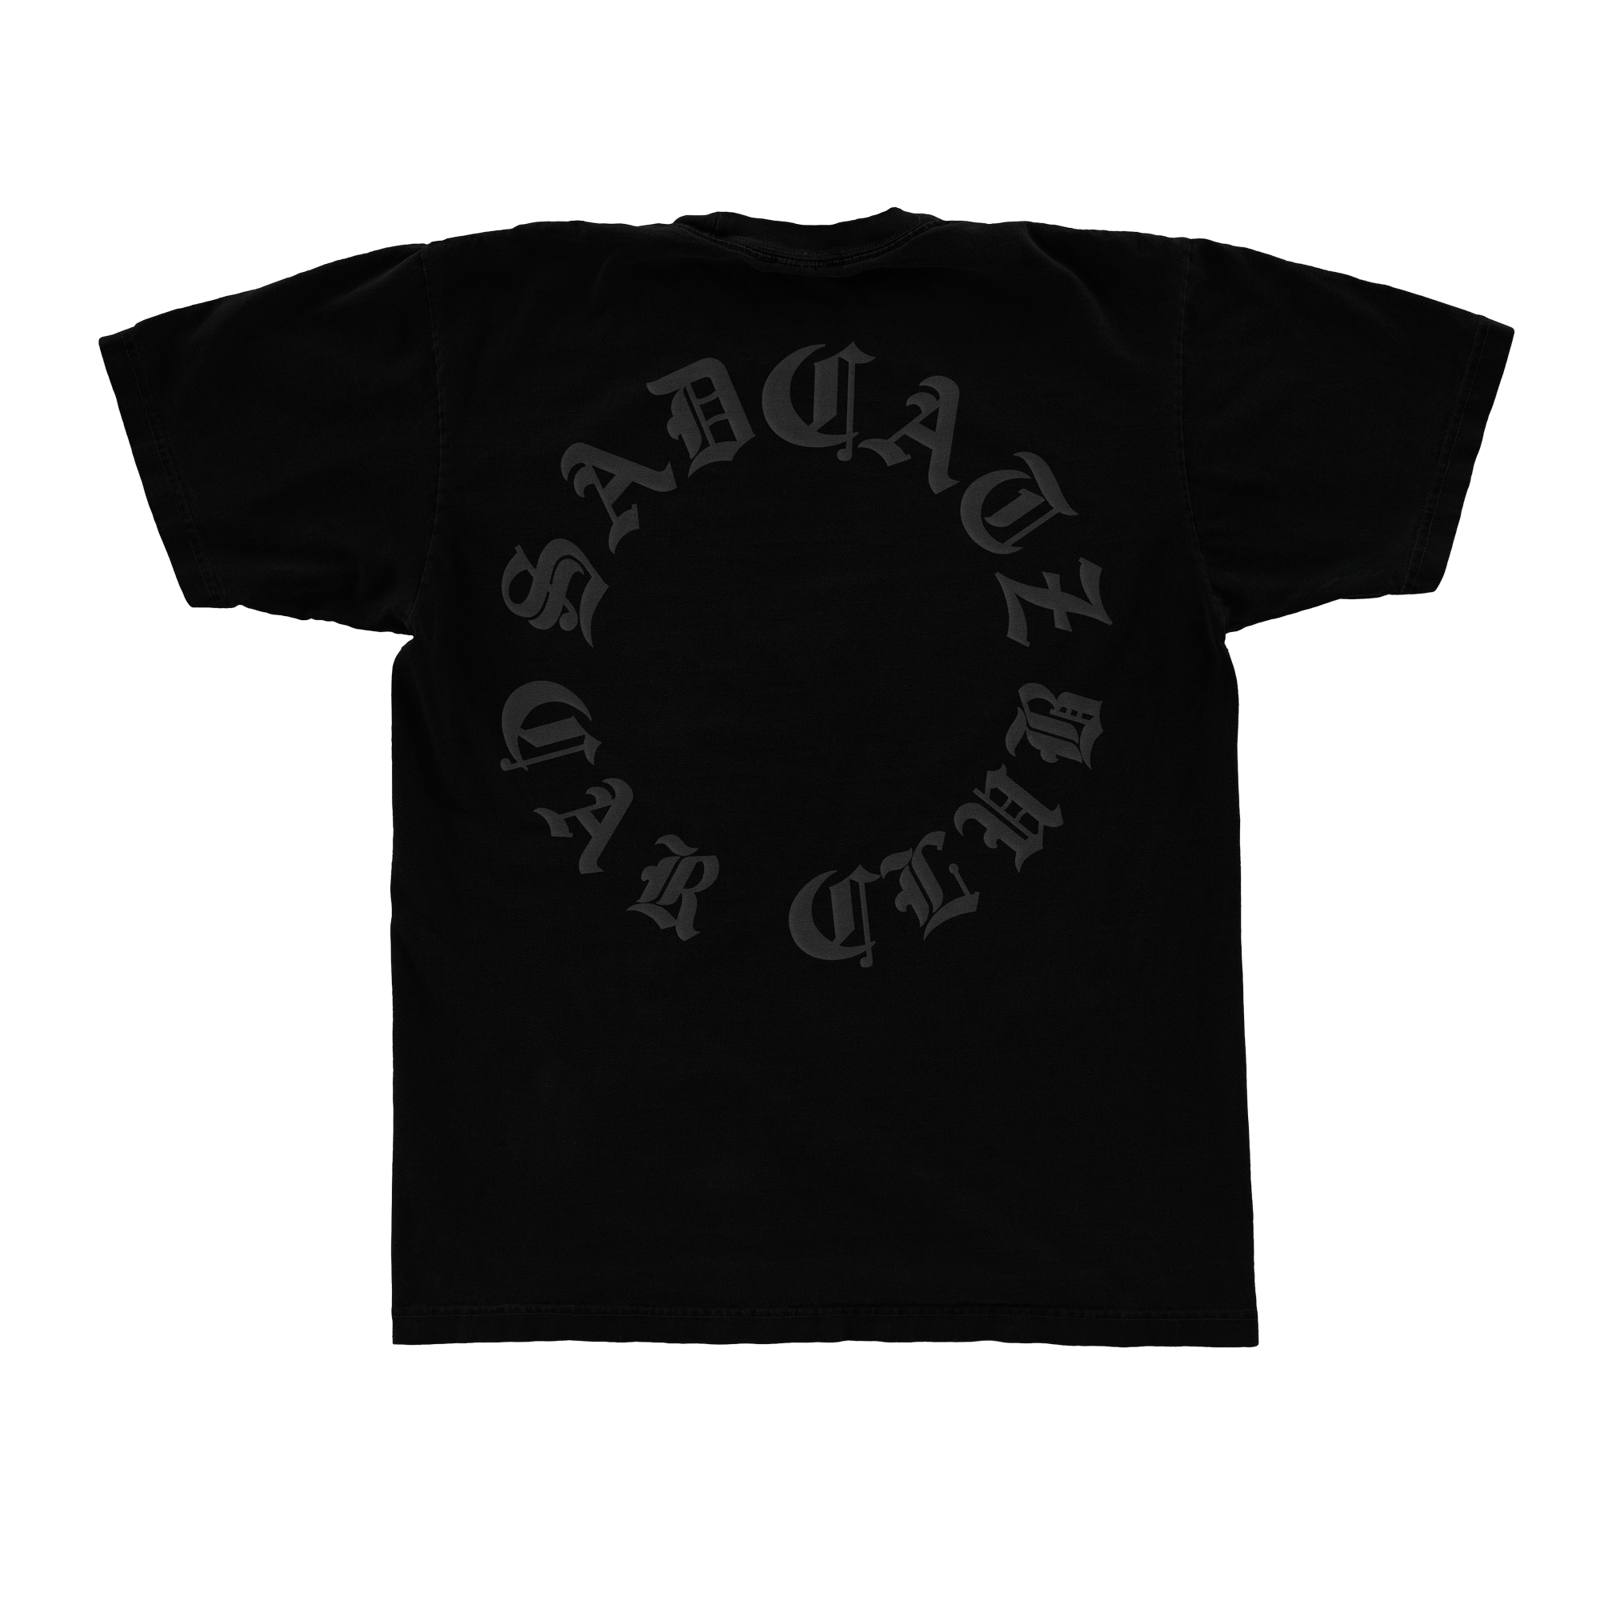 Car Club Tee (Black)